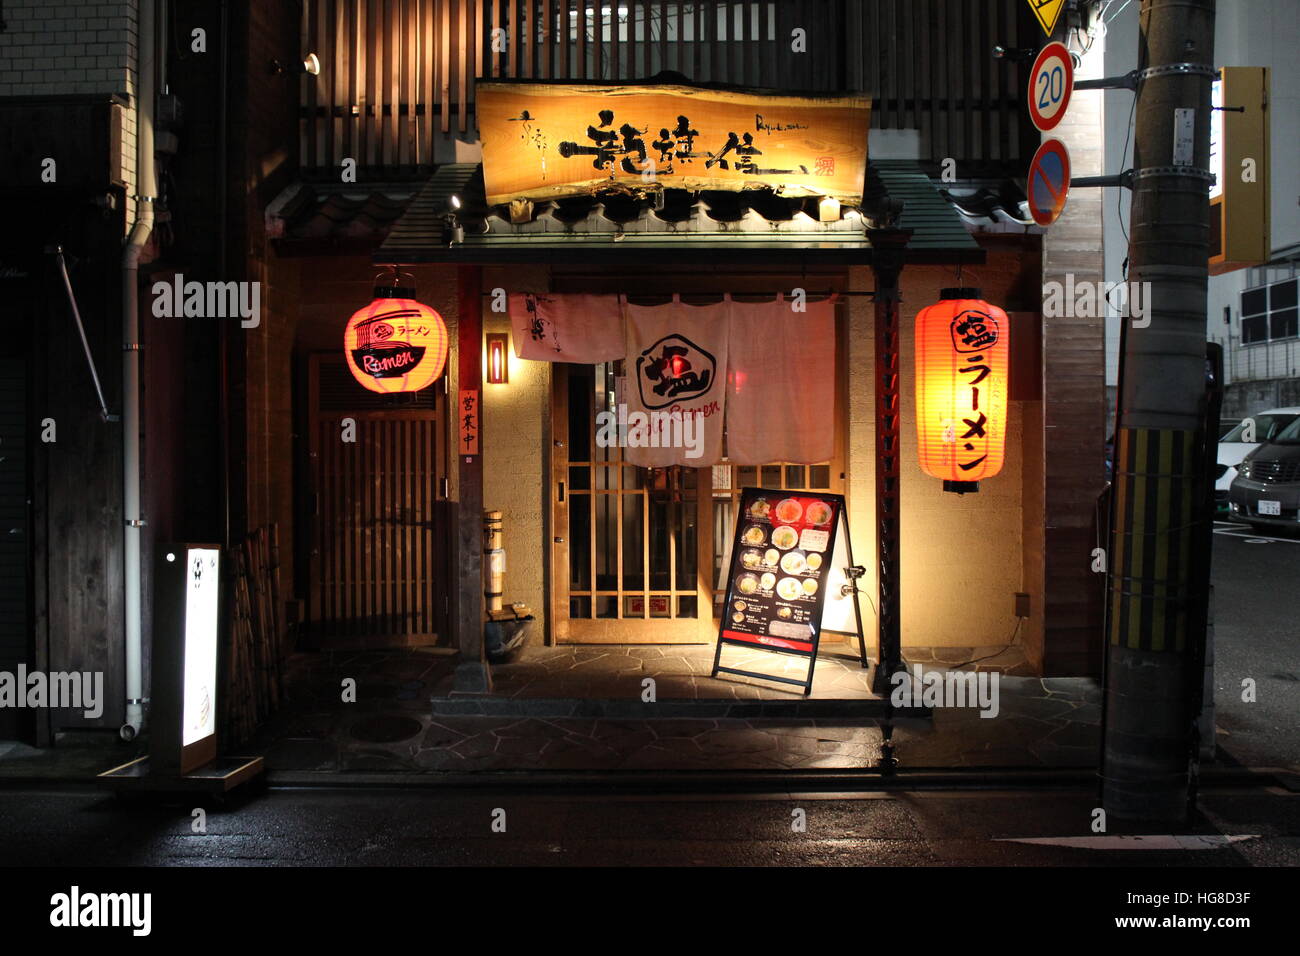 Authentic japanese ramen restaurant